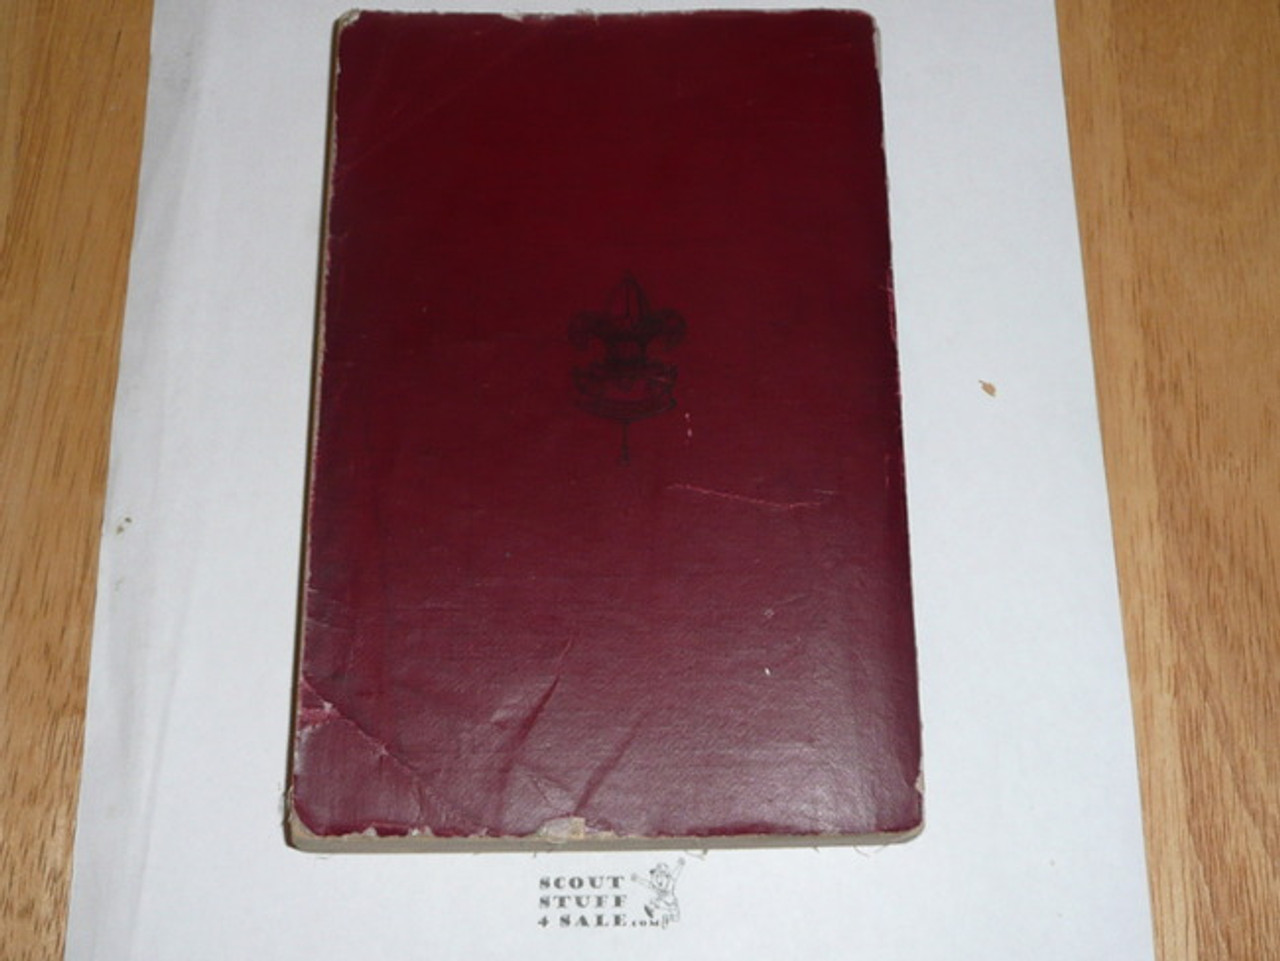 1912 Boy Scout Handbook, First Edition, Fourth Printing, Near Mint Condition, Lt Spine wear